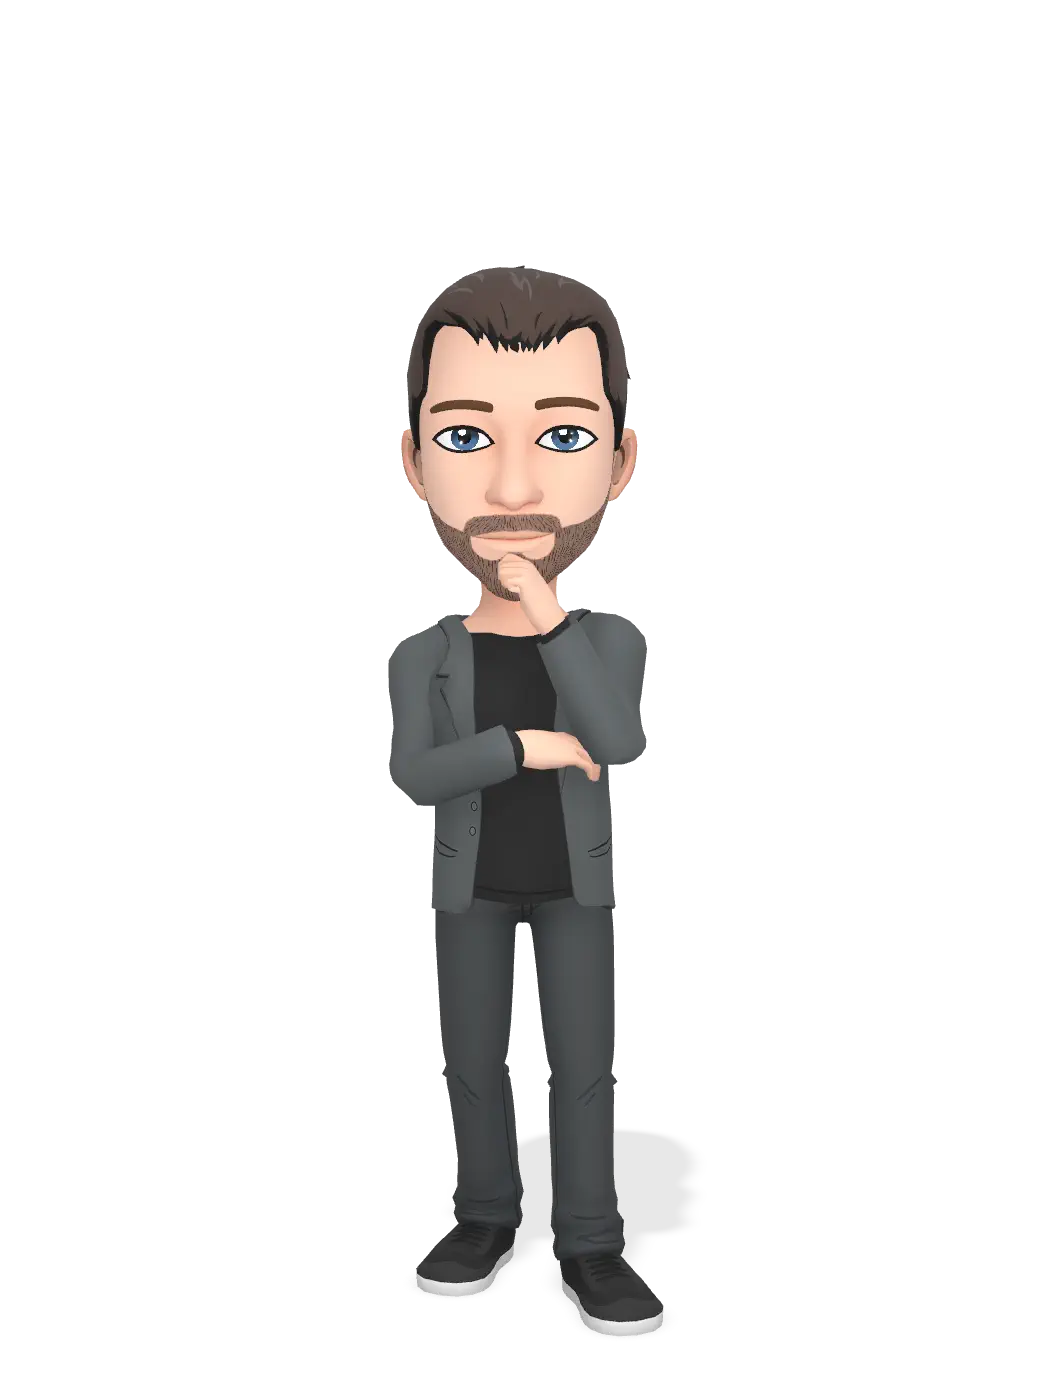 3D Bitmoji for jjaywest avatar